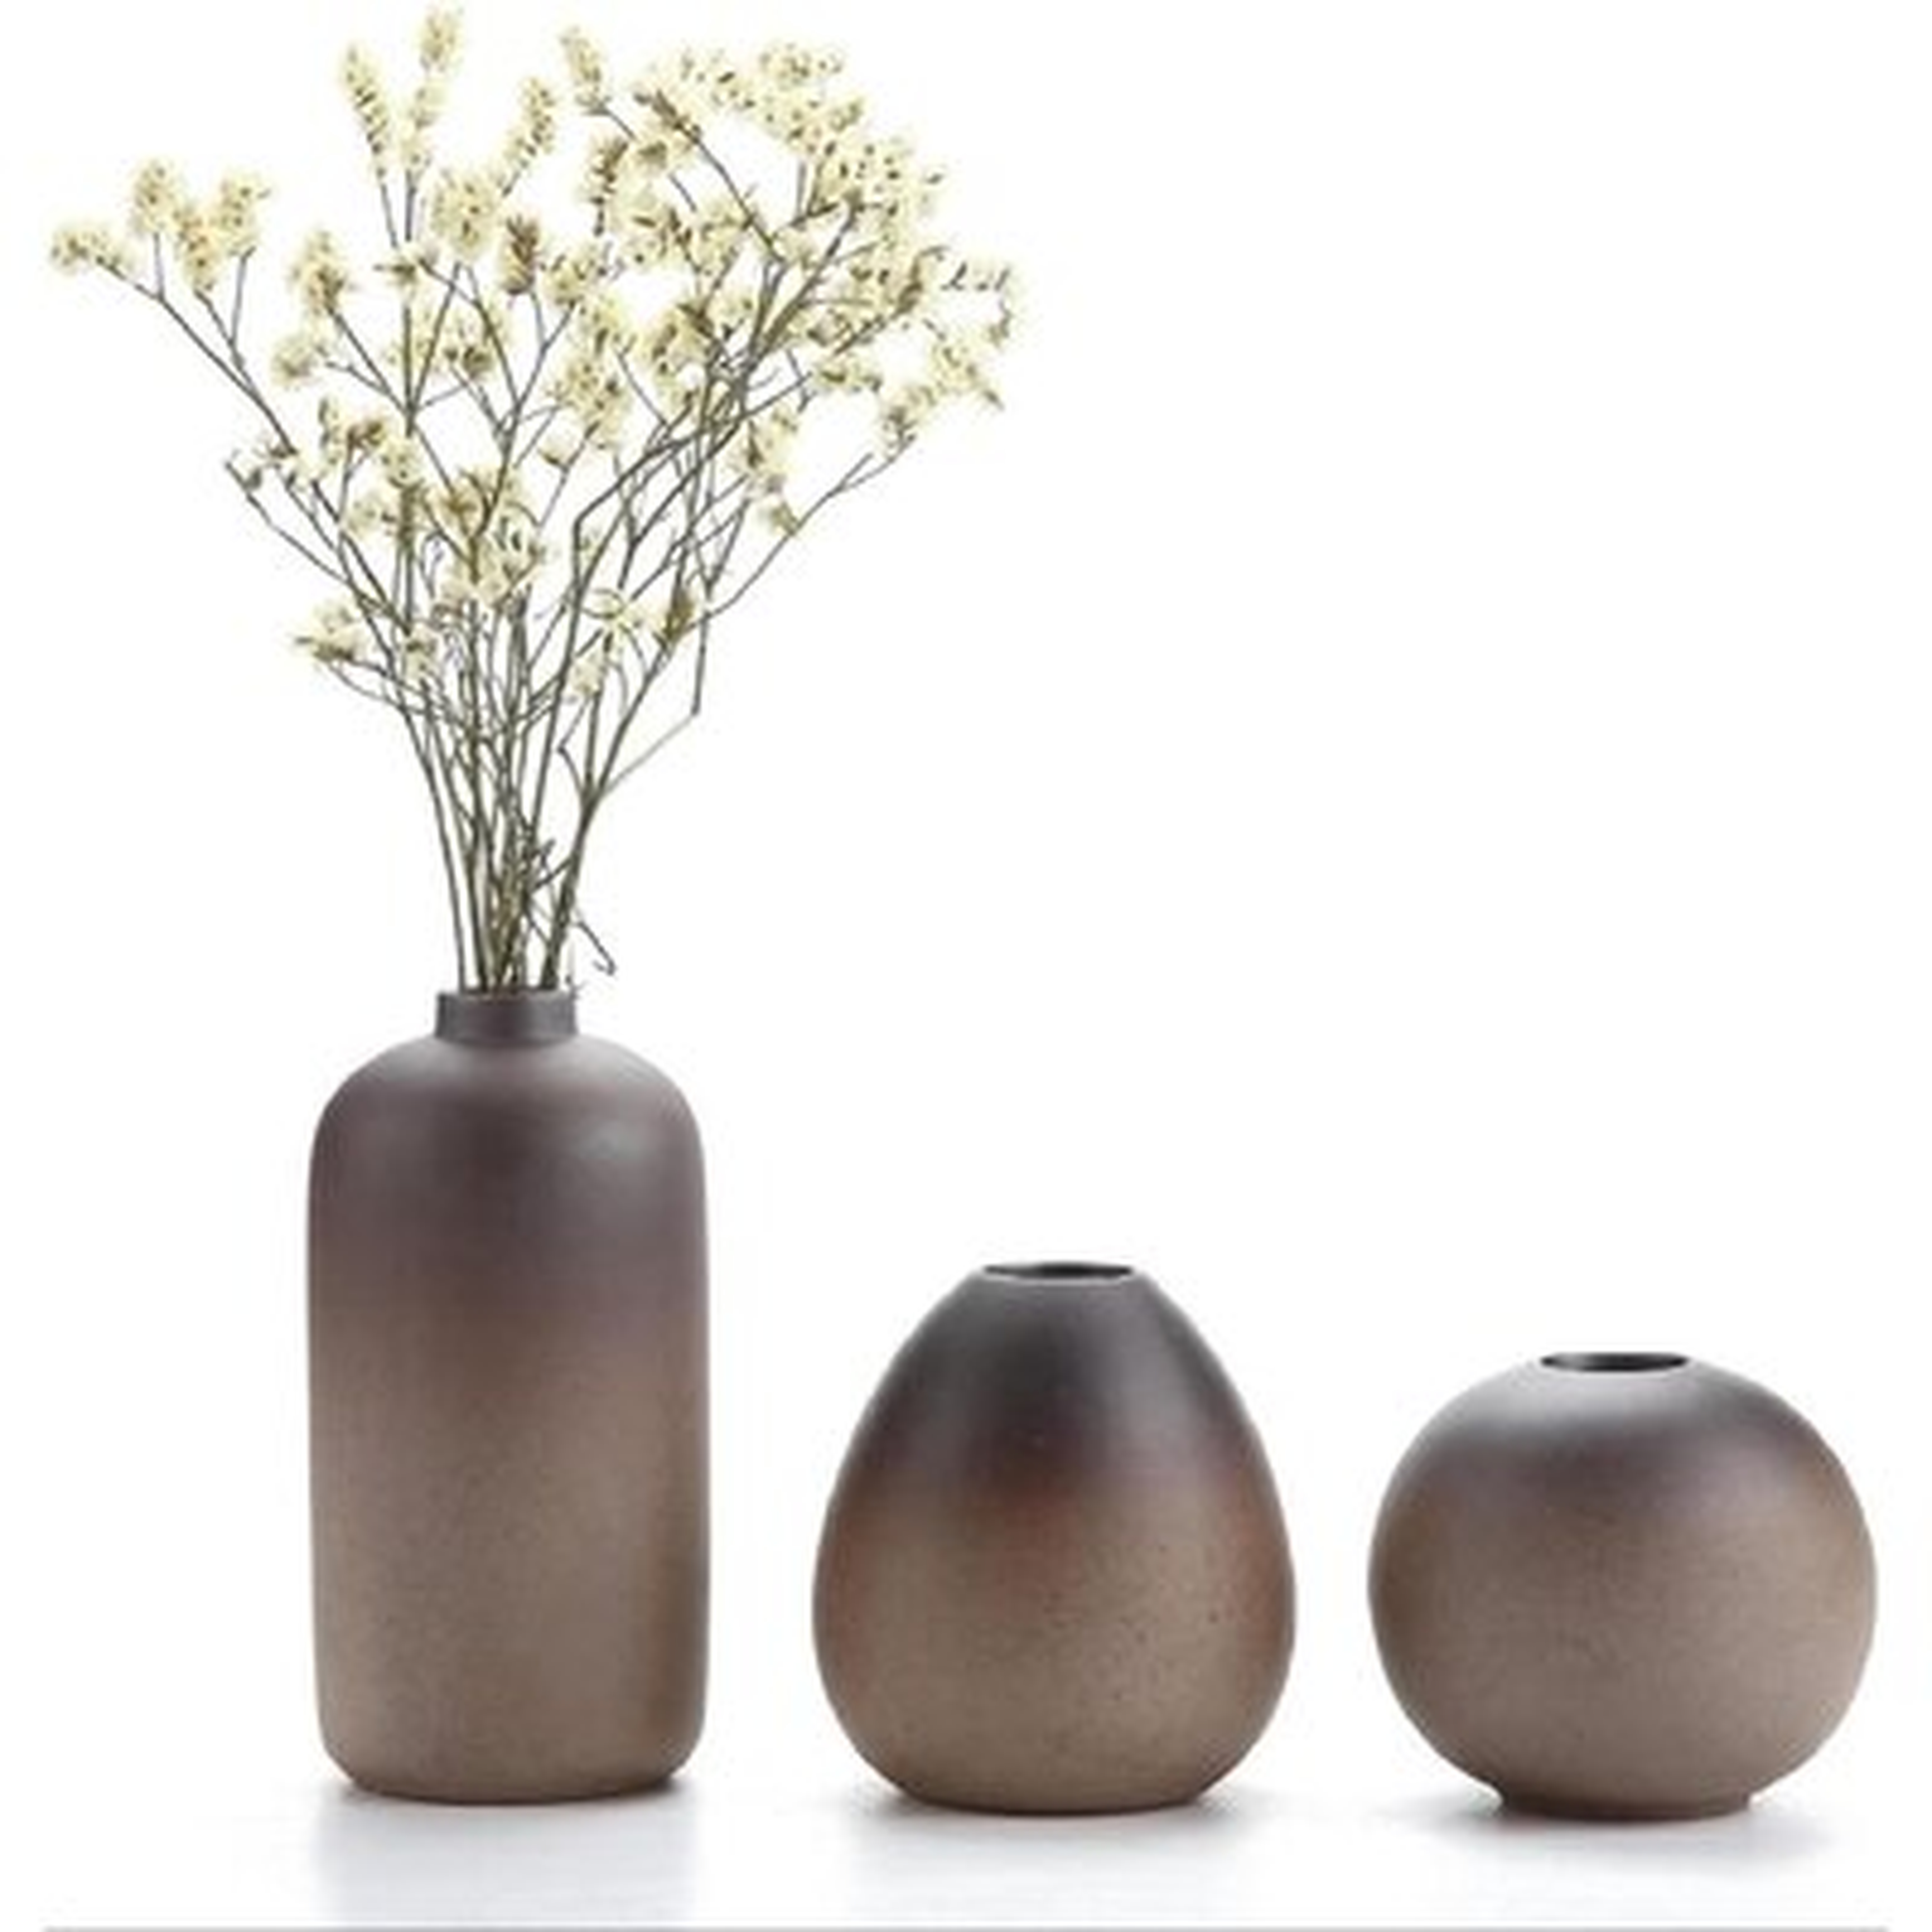 Small Ceramic Flower Vase Set Of 3, Modern Style Simple Design Metallic Gradually Varied Brown Color Elegant Home Office Living Room Table Desk Decoration For Wedding Home Visit - Wayfair